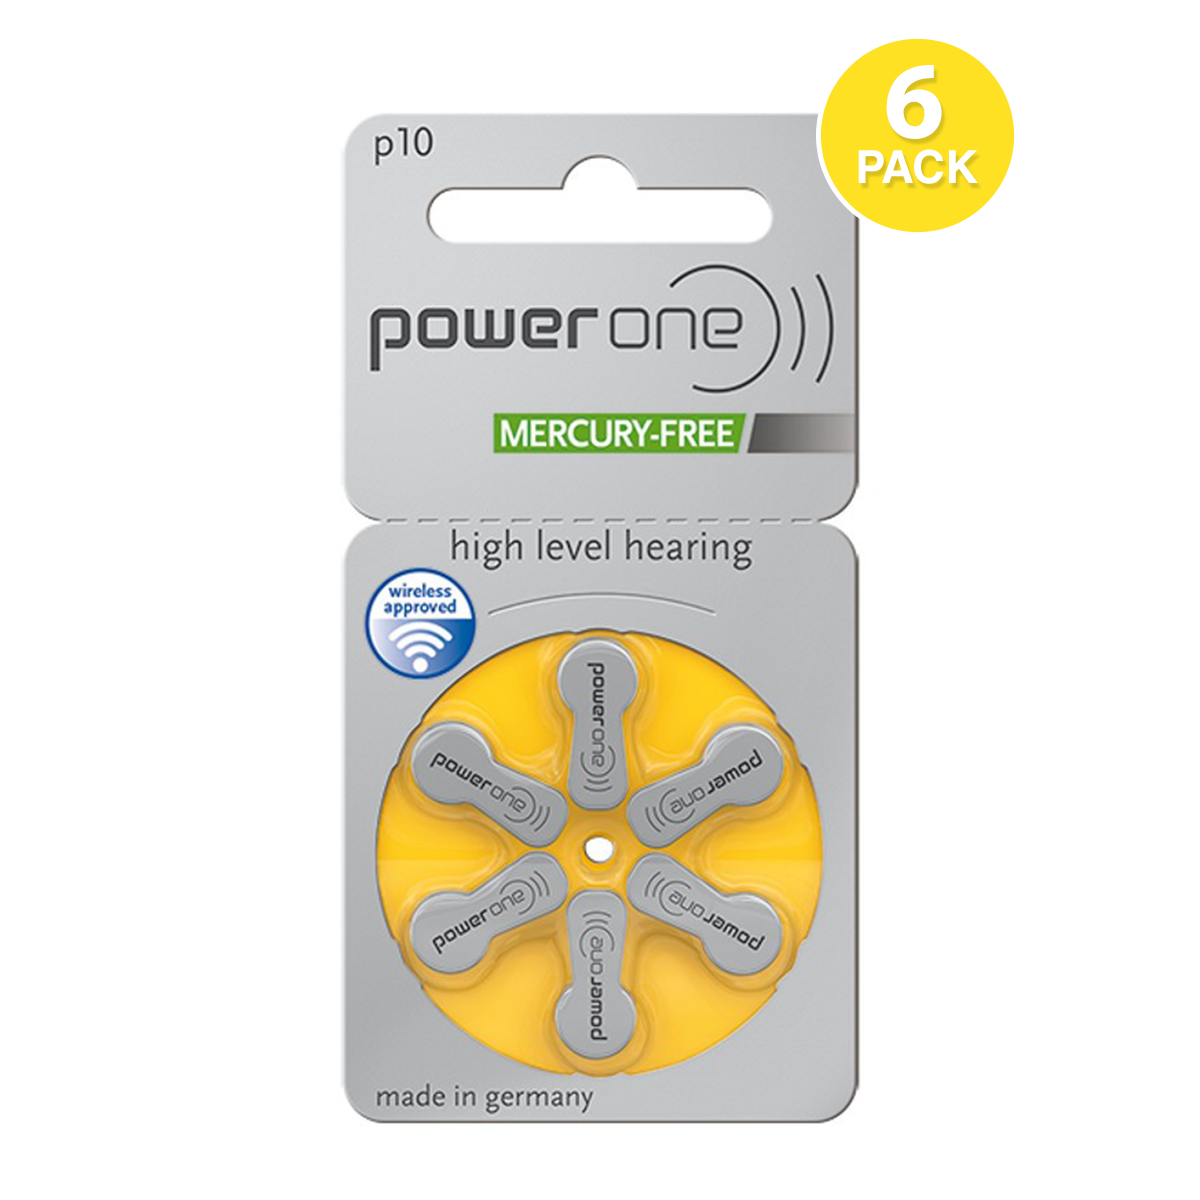 Power One Size P10 Hearing Aid Battery, Mercury-Free (6 pcs.)